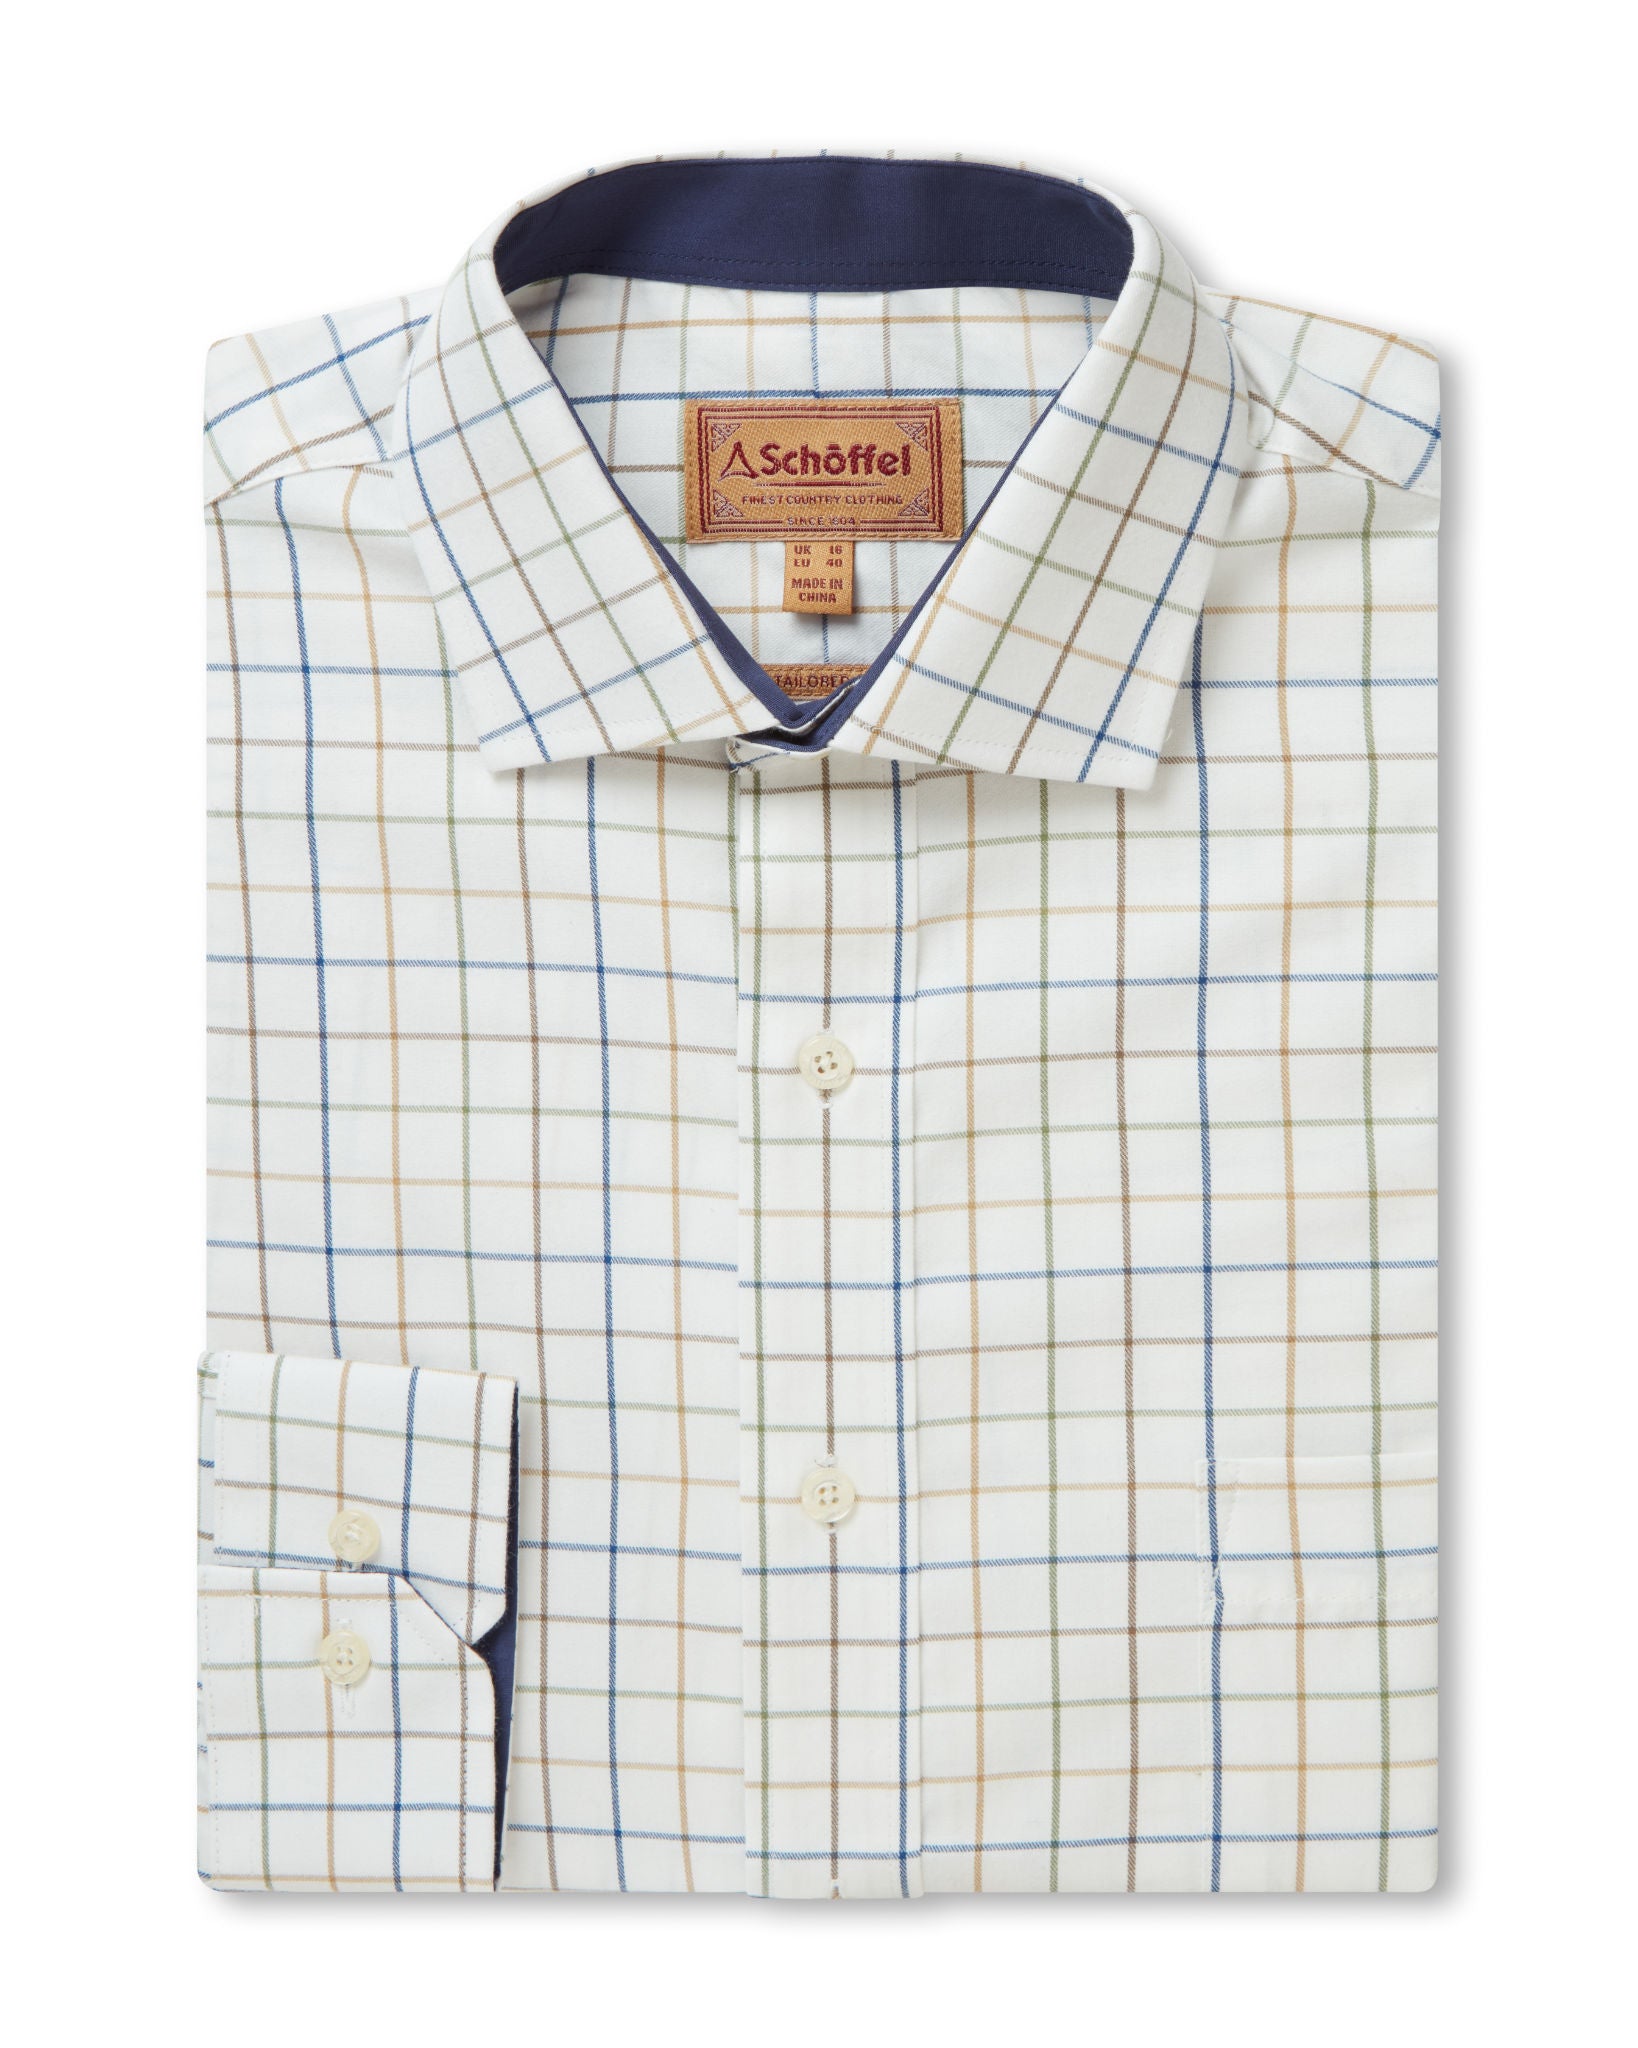 Wells Tailored Shirt - Green/Navy/Brown Check